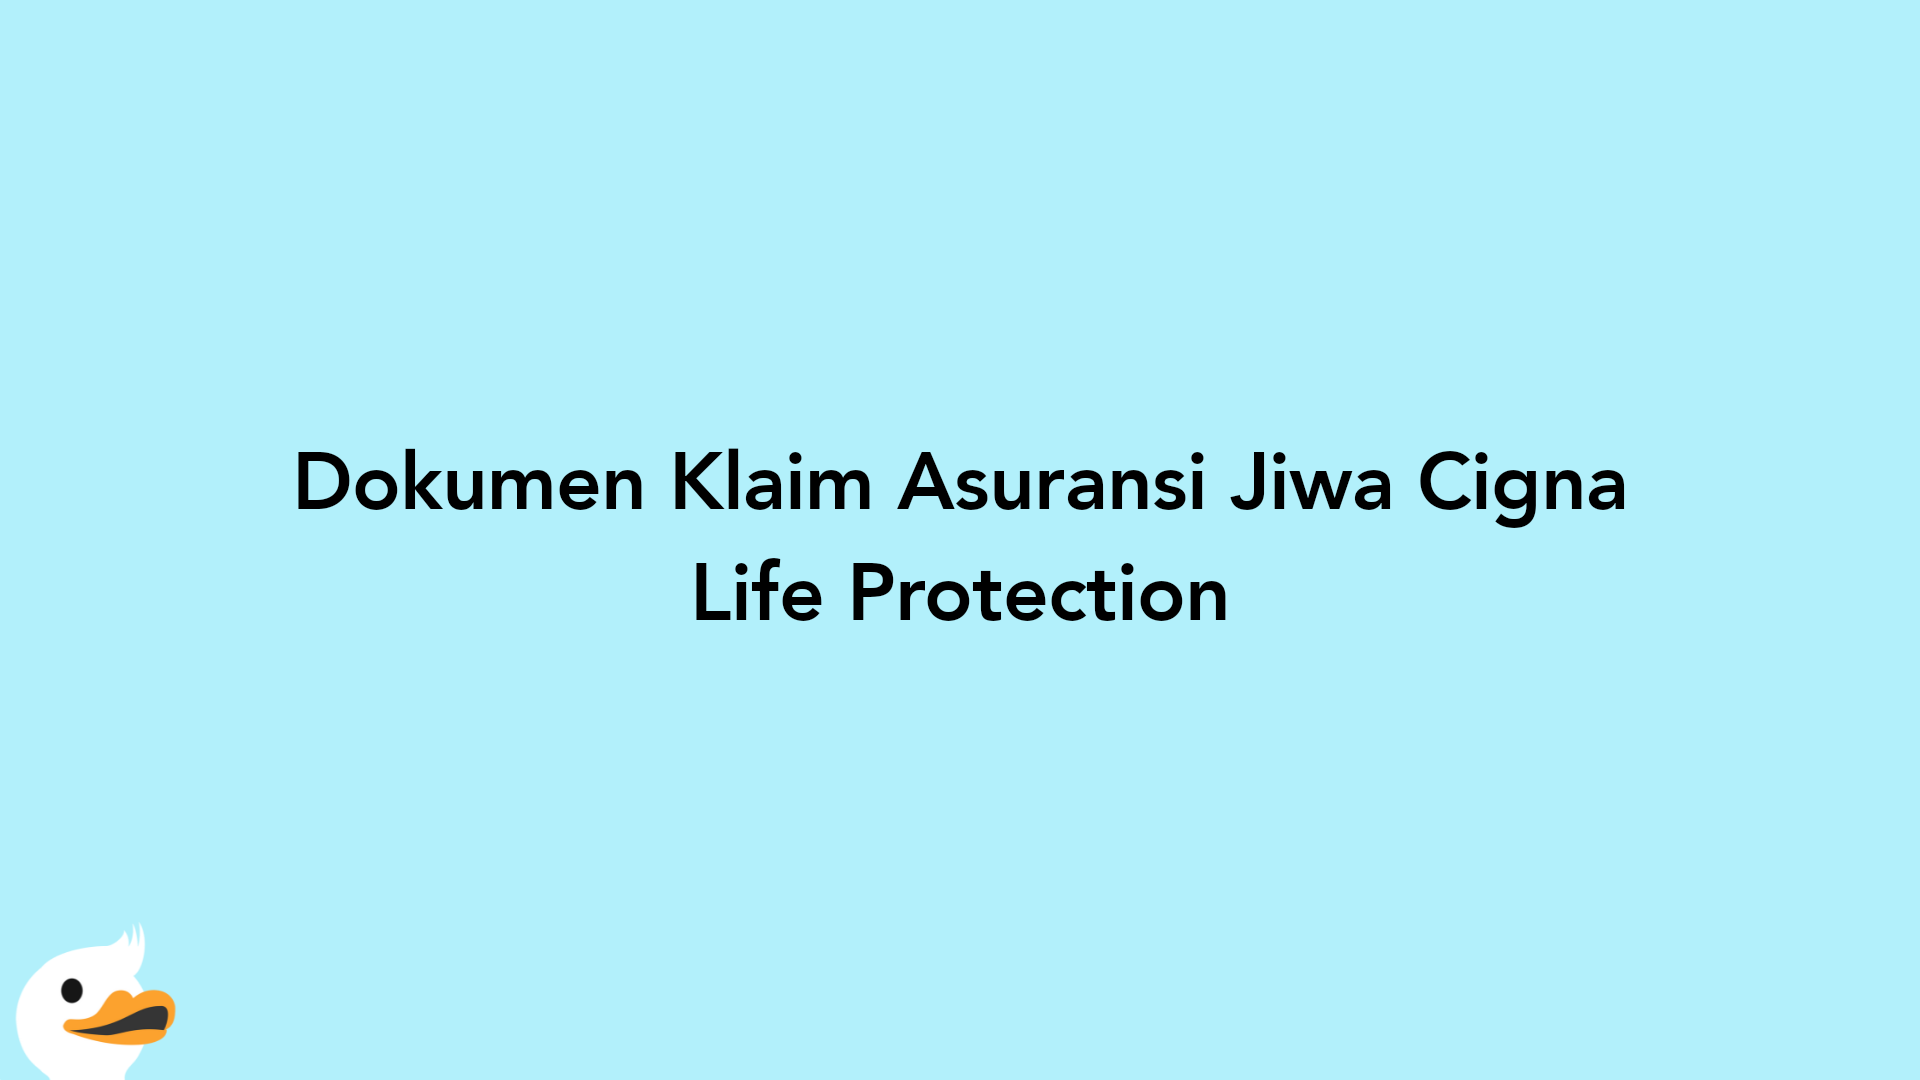 Dokumen Klaim Asuransi Jiwa Cigna Life Protection